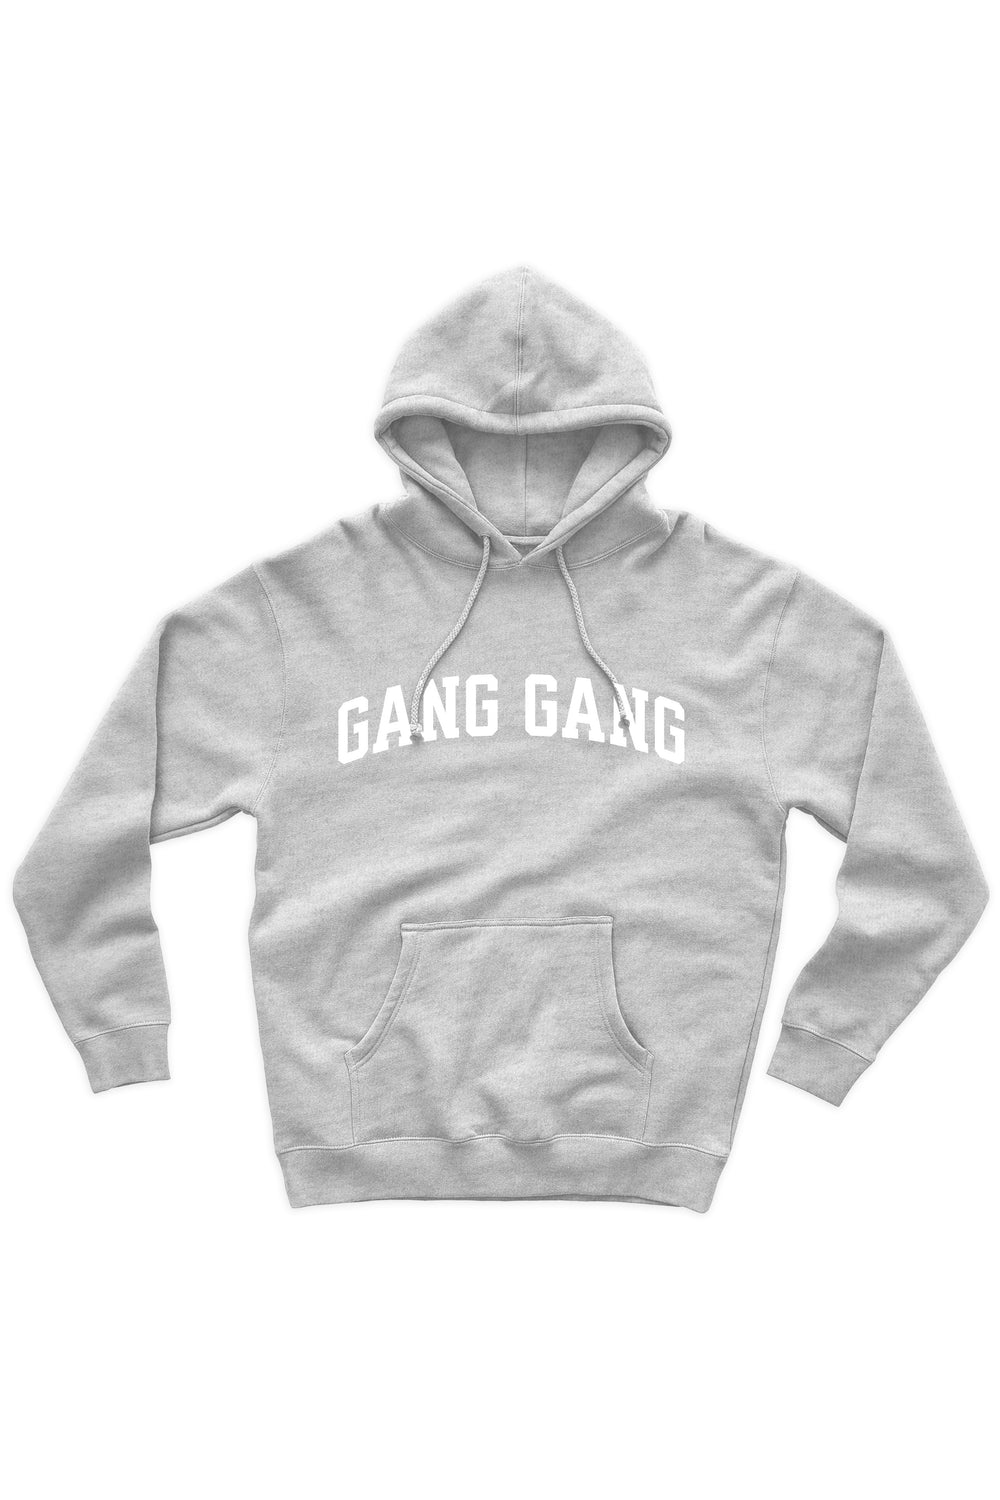 Gang Gang Hoodie (White Logo) - Zamage